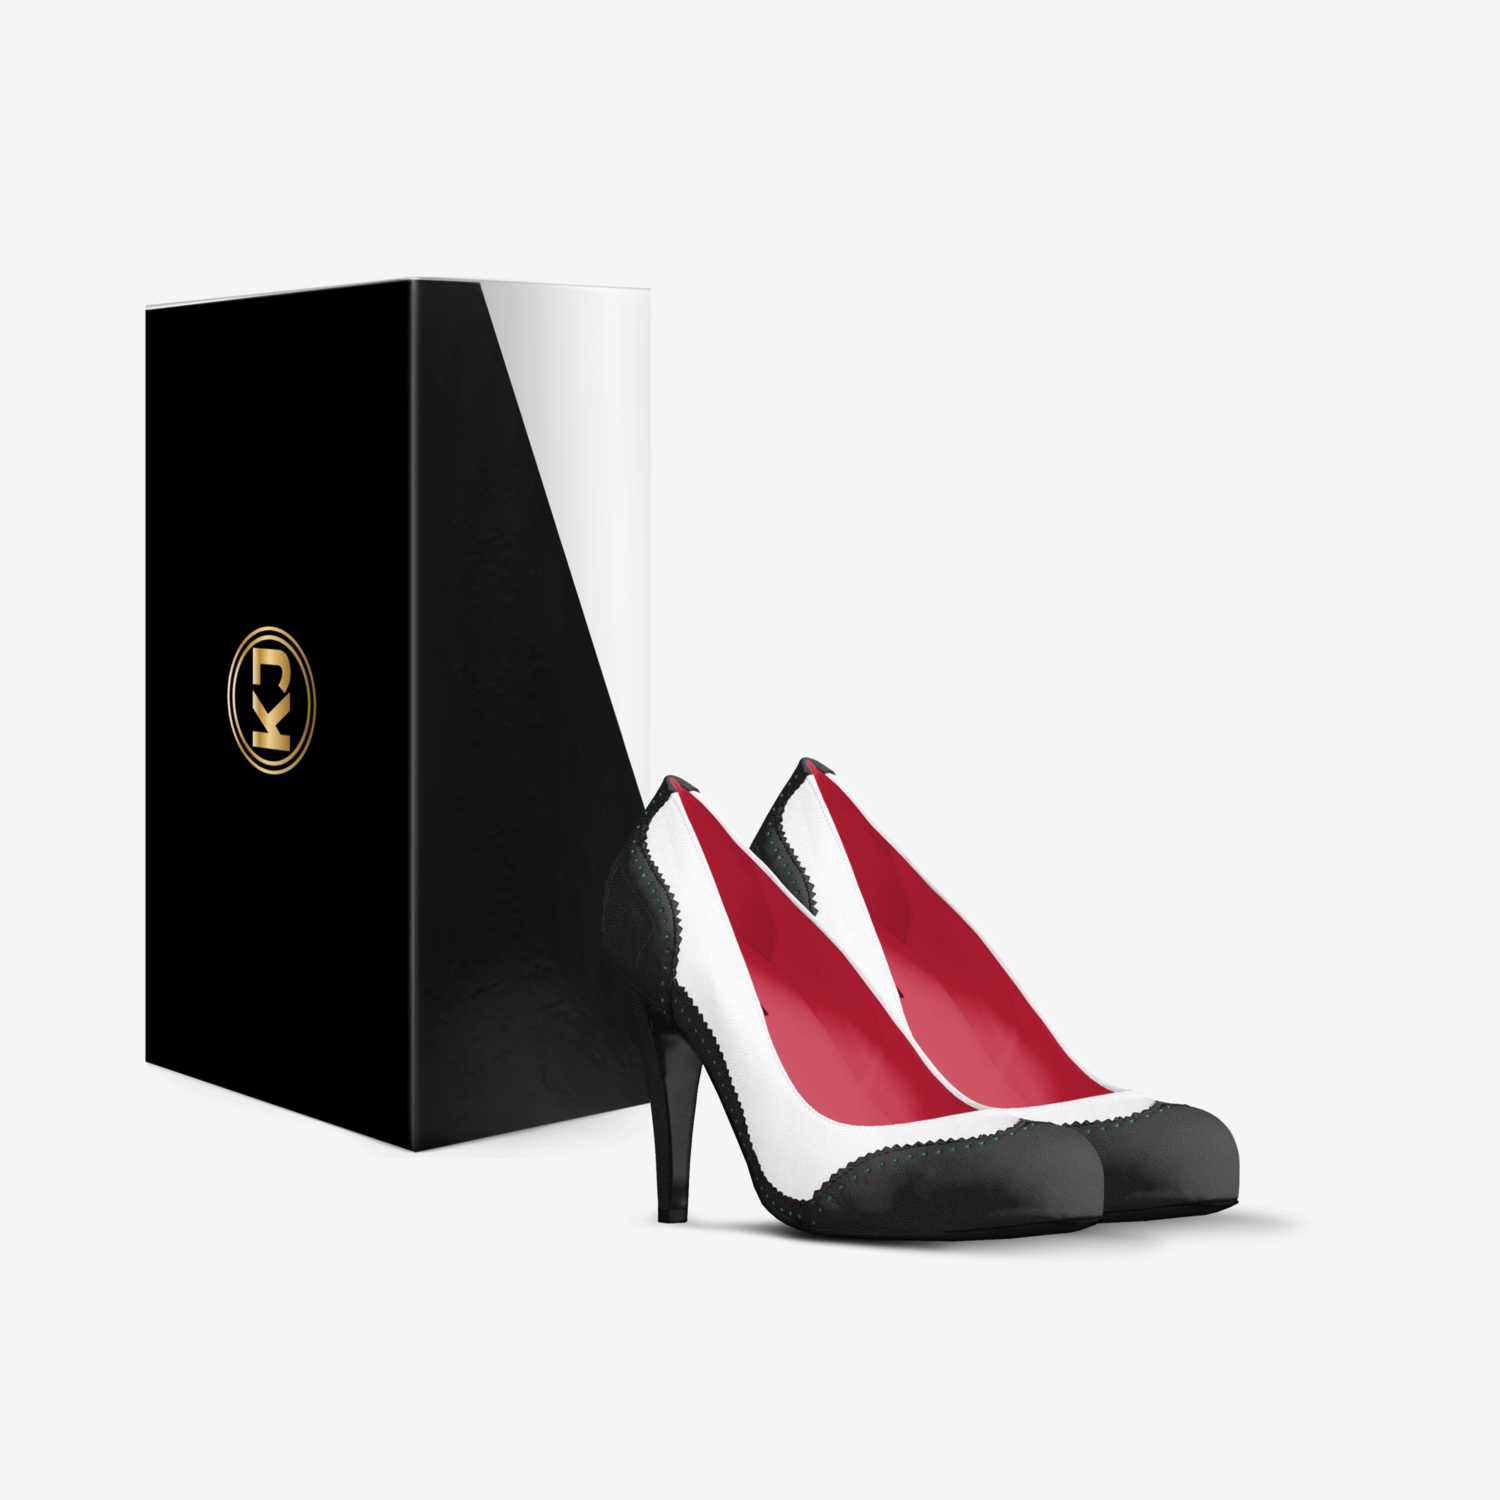 XI custom made in Italy shoes by Kelton Jones | Box view